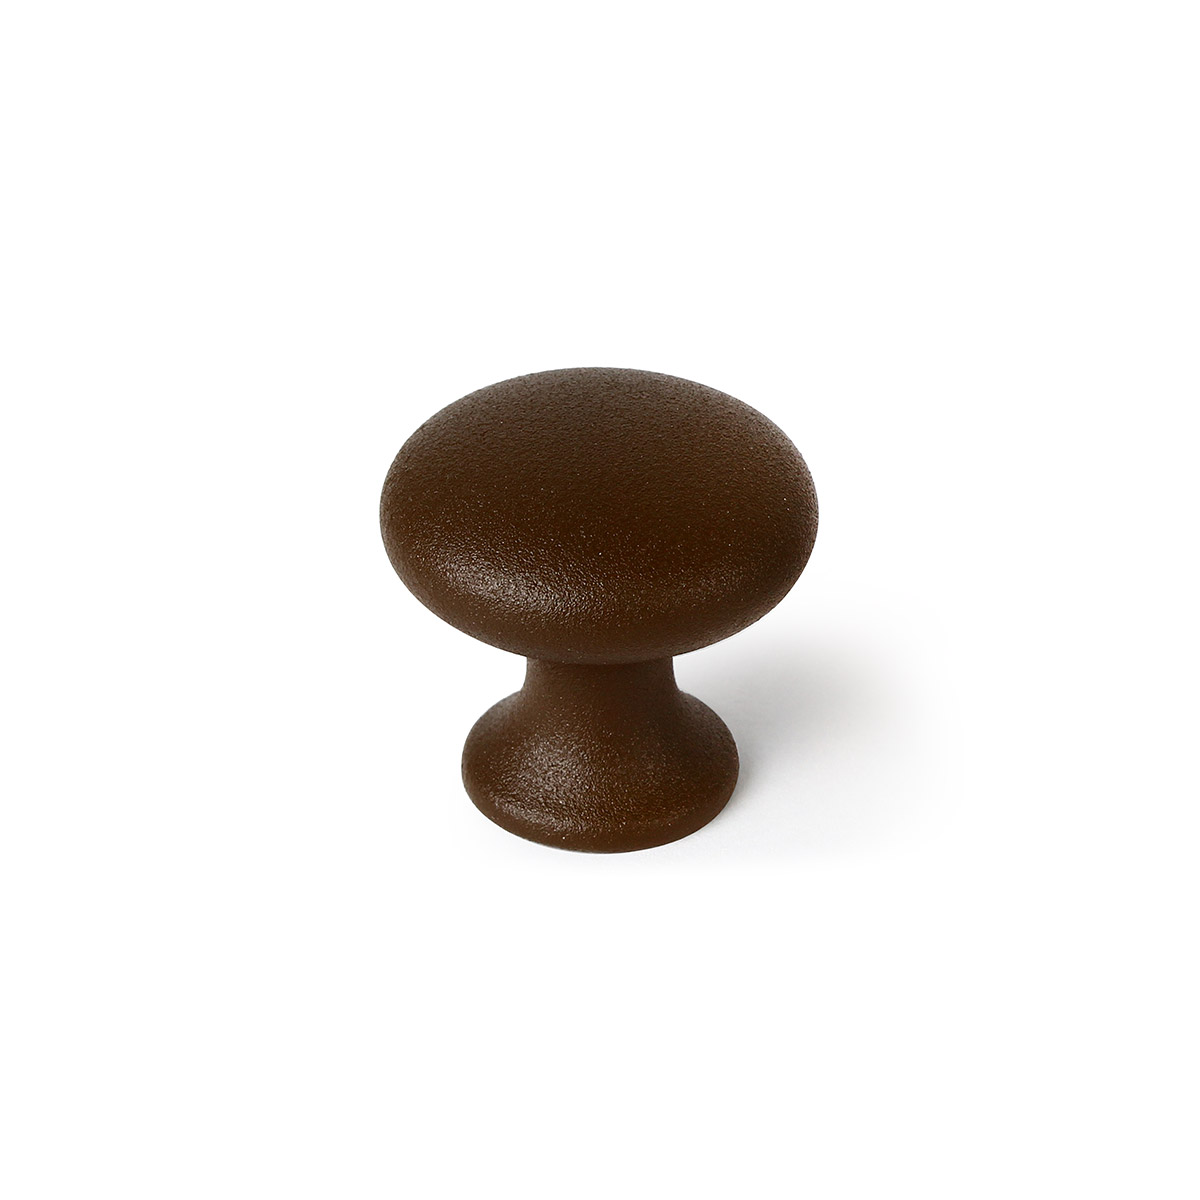 Bouton en Zamak finition brune, dimensions: 30x30x30mm et Ø: 30mm